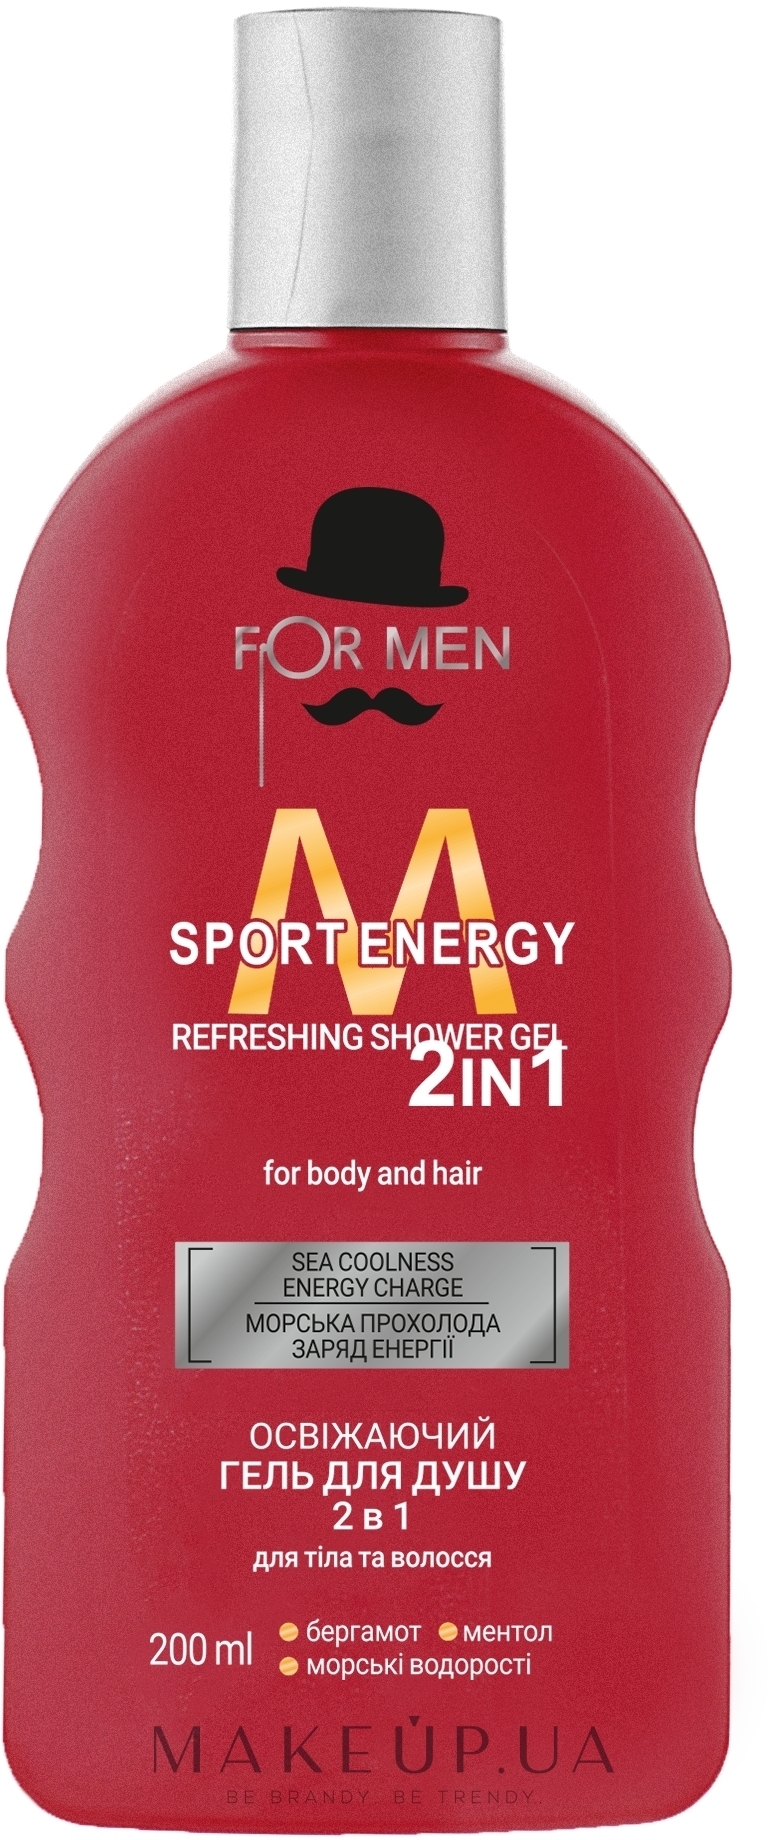 Освіжальний гель для душу 2 в 1 - For Men Sport Energy Shower Gel — фото 200ml